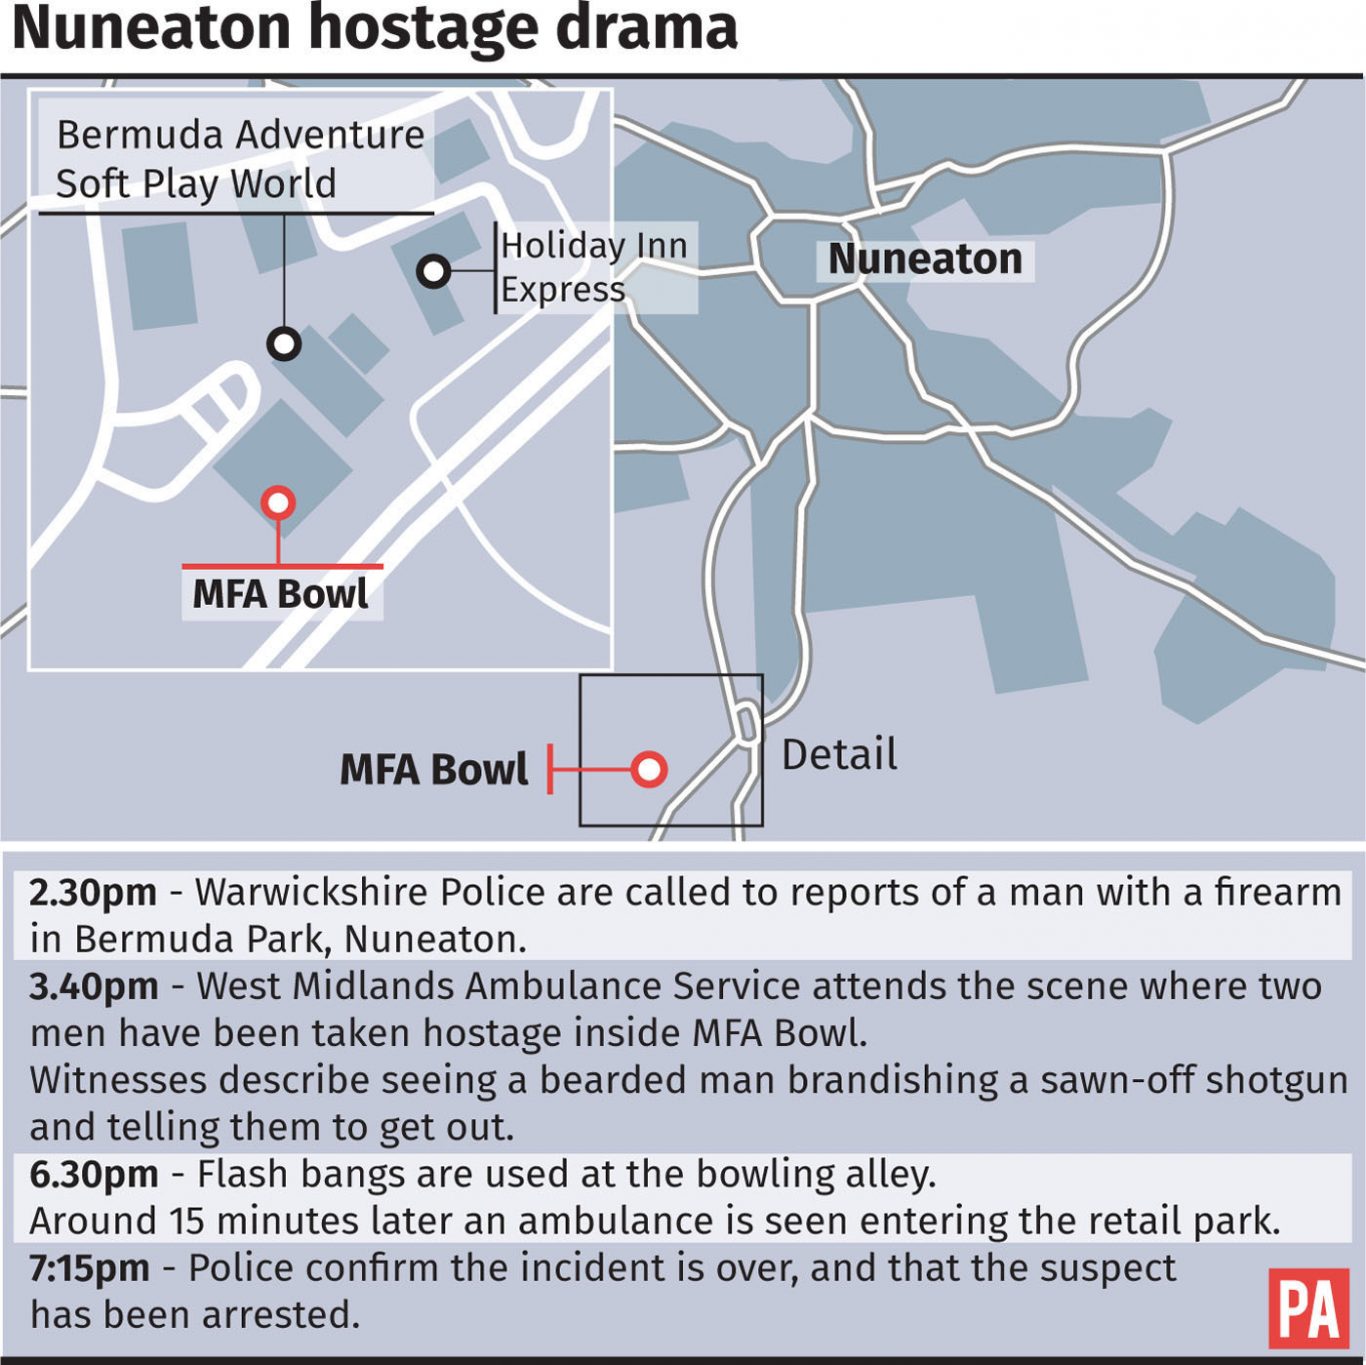 Nuneaton hostage drama